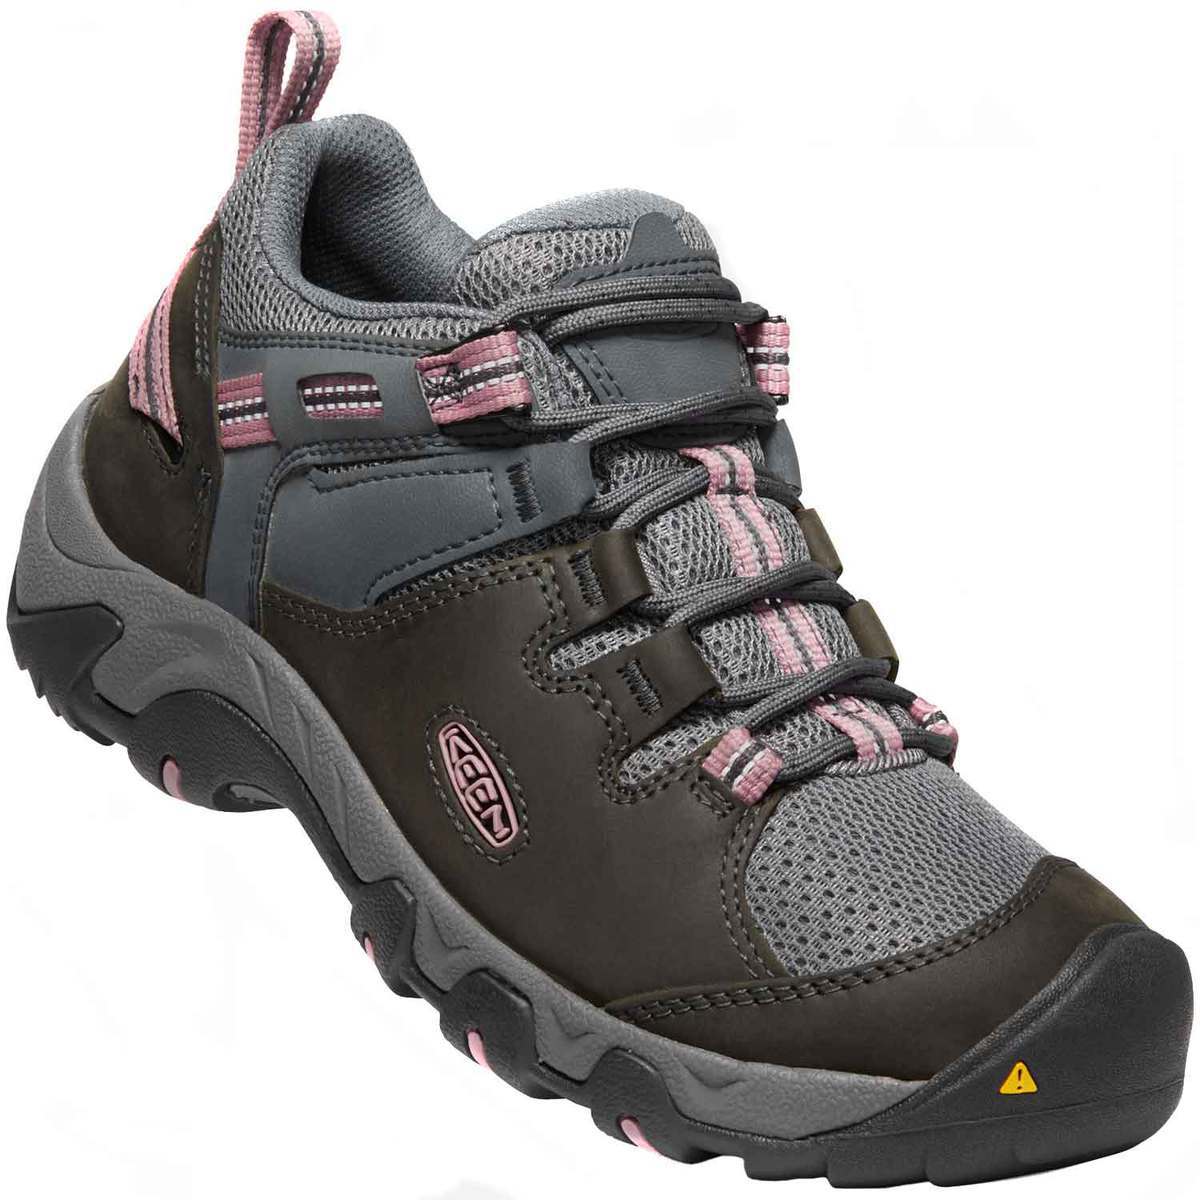 KEEN Women's Steens Vent Waterproof Low Hiking Shoes - Magnet - Size 7 ...